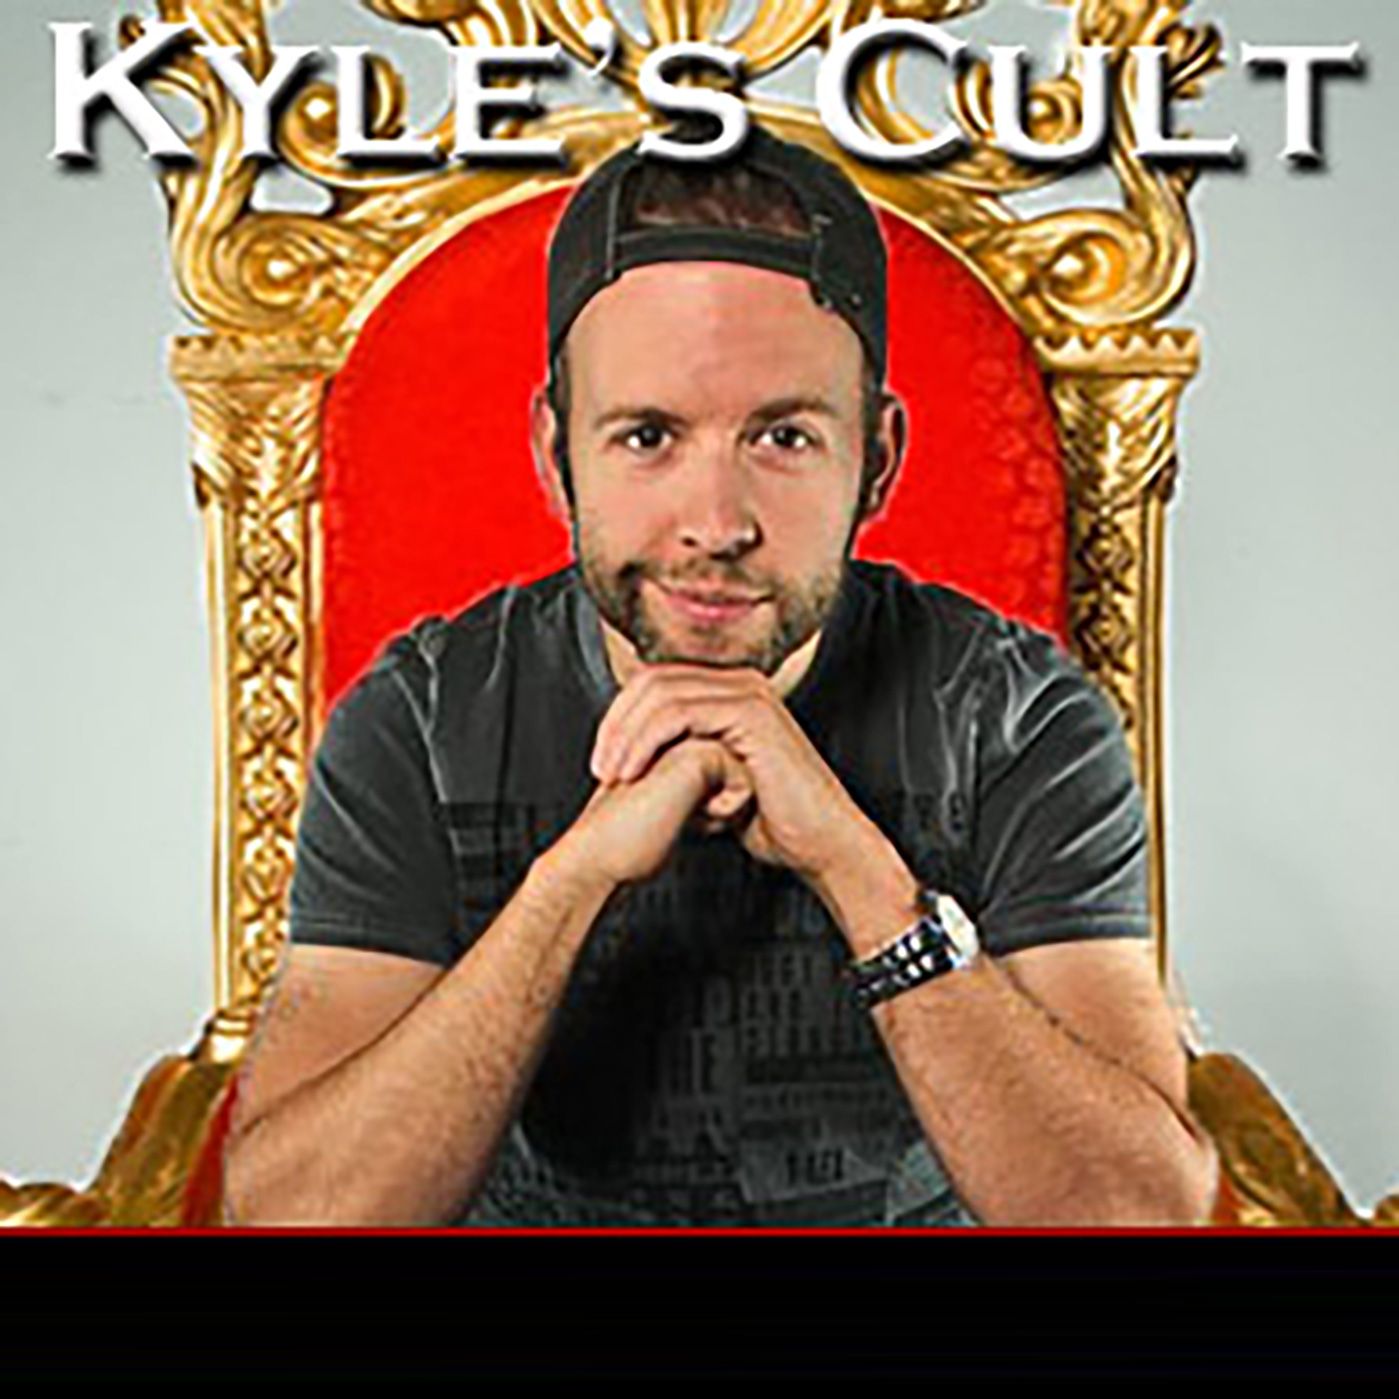 Kyle Cease: Kyle's Cult